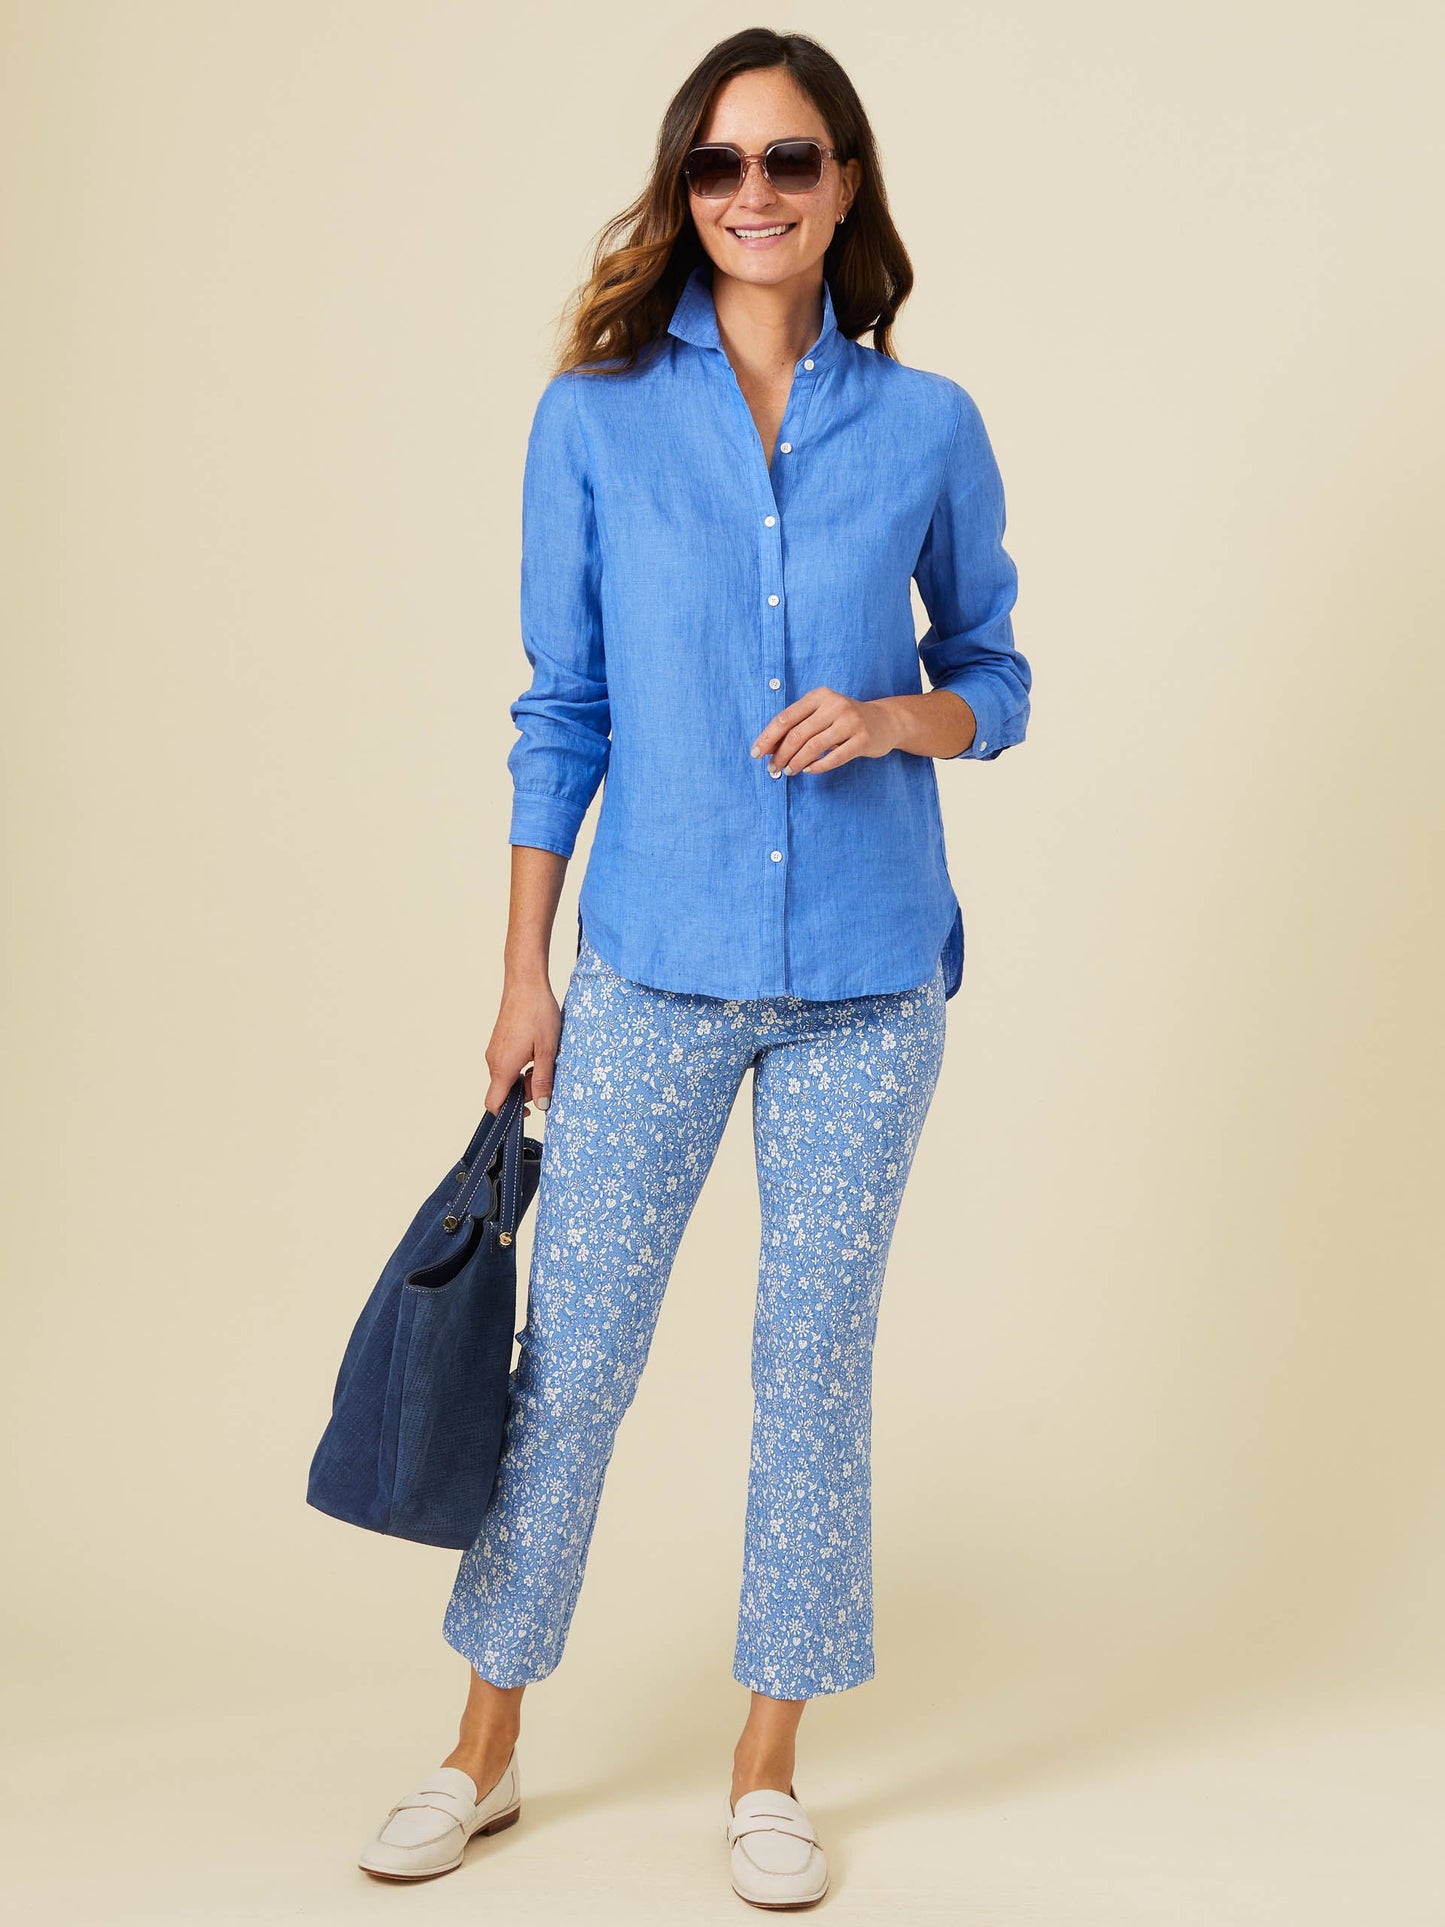 Model wearing J.McLaughlin Britt shirt in french blue made with linen.